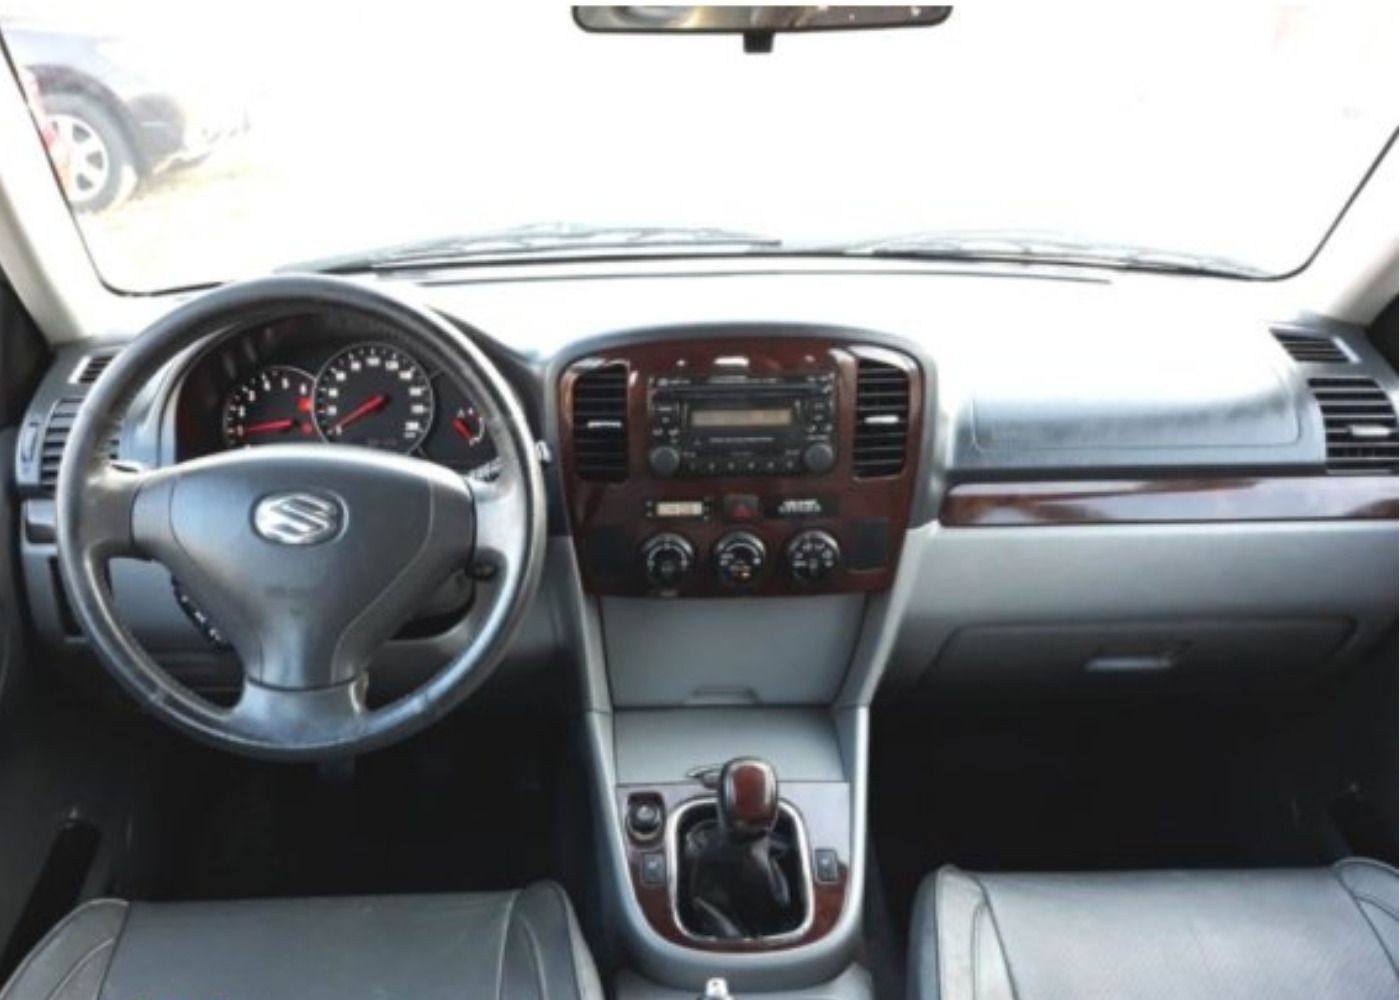 Wood Look Dash Trim Kit for 2003-2005 Suzuki Grand Vitara Auto Interior Panel